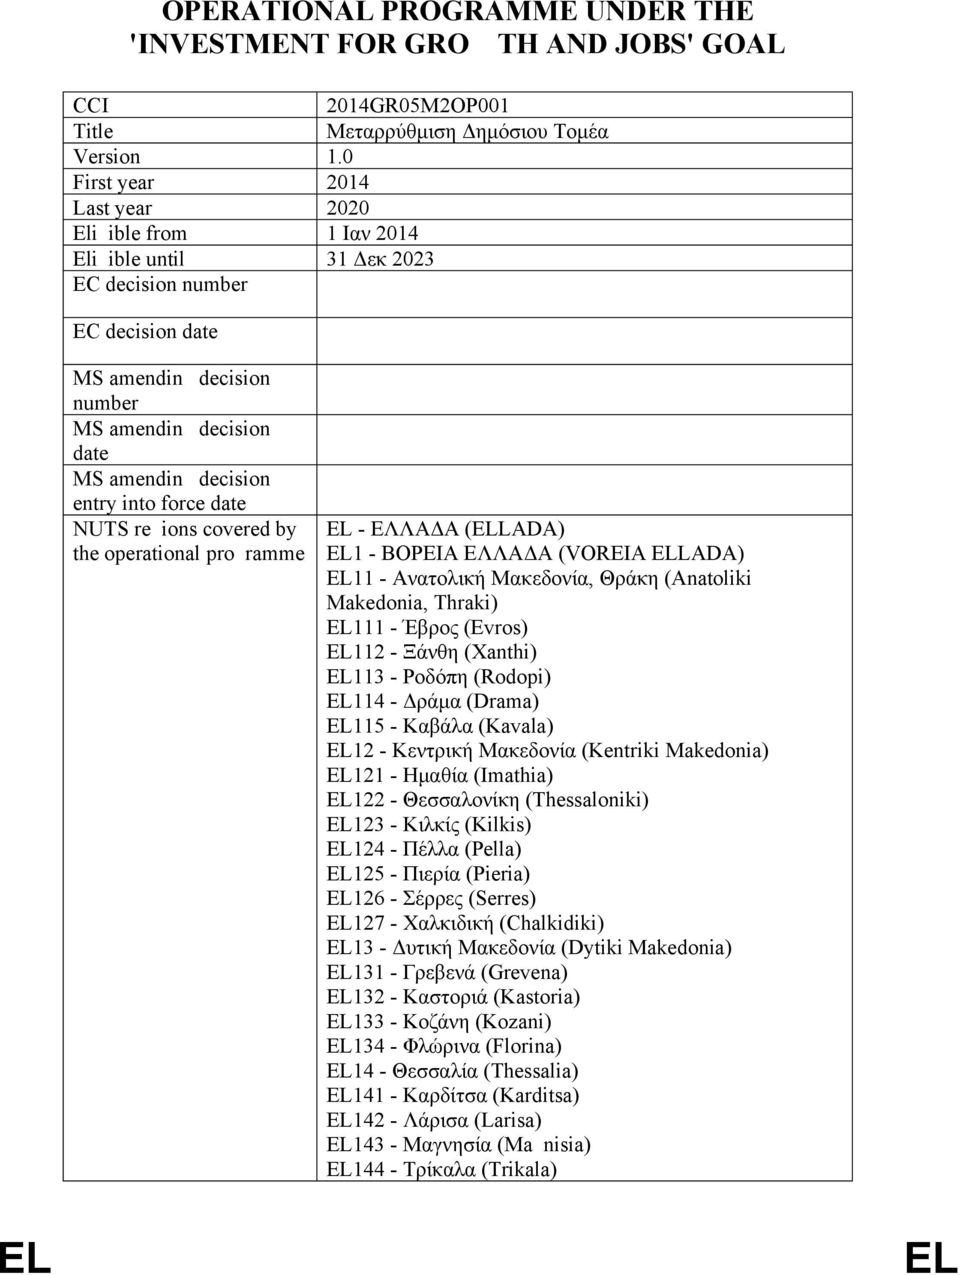 entry into force date NUTS regions covered by the operational programme EL - ΕΛΛΑΔΑ (ELLADA) EL1 - ΒΟΡΕΙΑ ΕΛΛΑΔΑ (VOREIA ELLADA) EL11 - Aνατολική Μακεδονία, Θράκη (Anatoliki Makedonia, Thraki) EL111